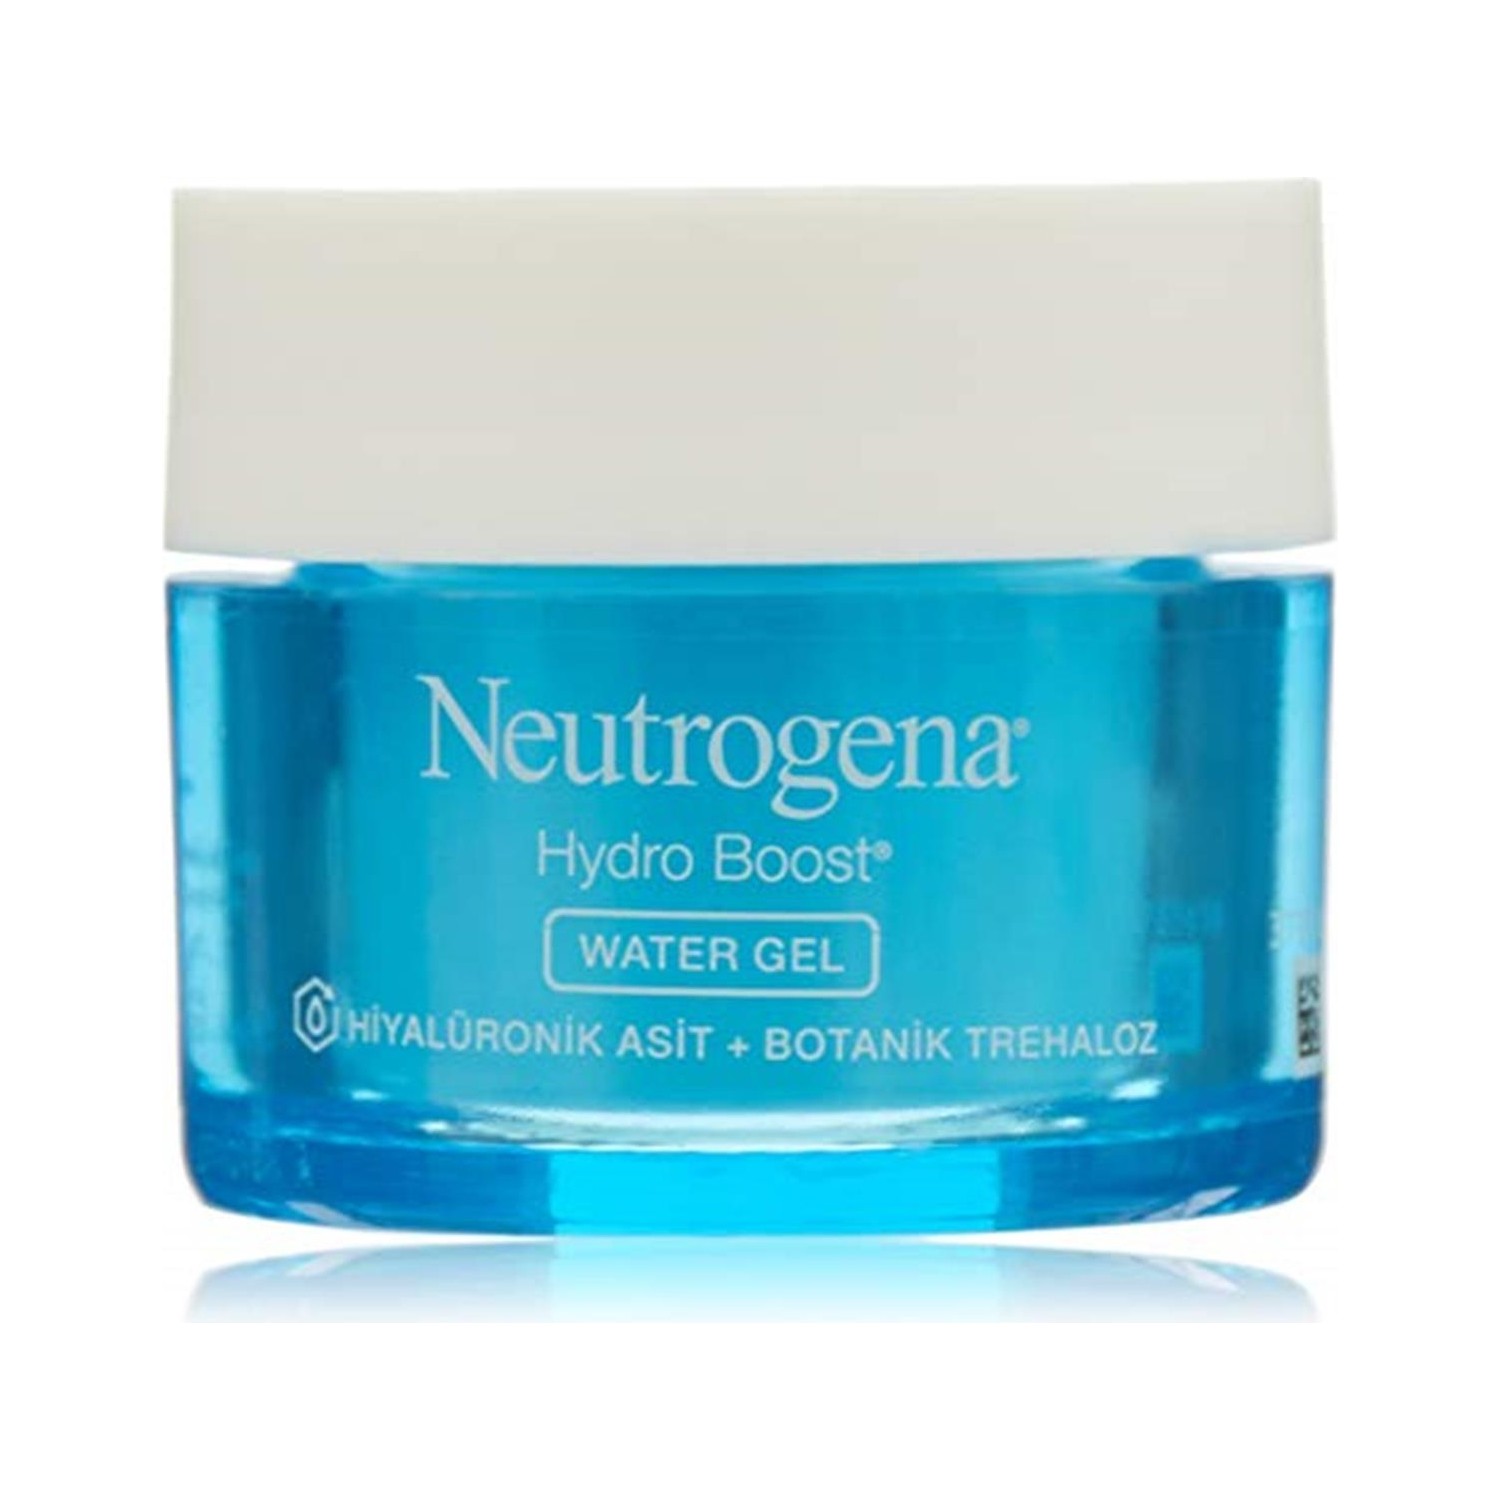 Гель увлажняющий Neutrogena Hydro Boost Water Gel для нормальной кожи, 50 мл